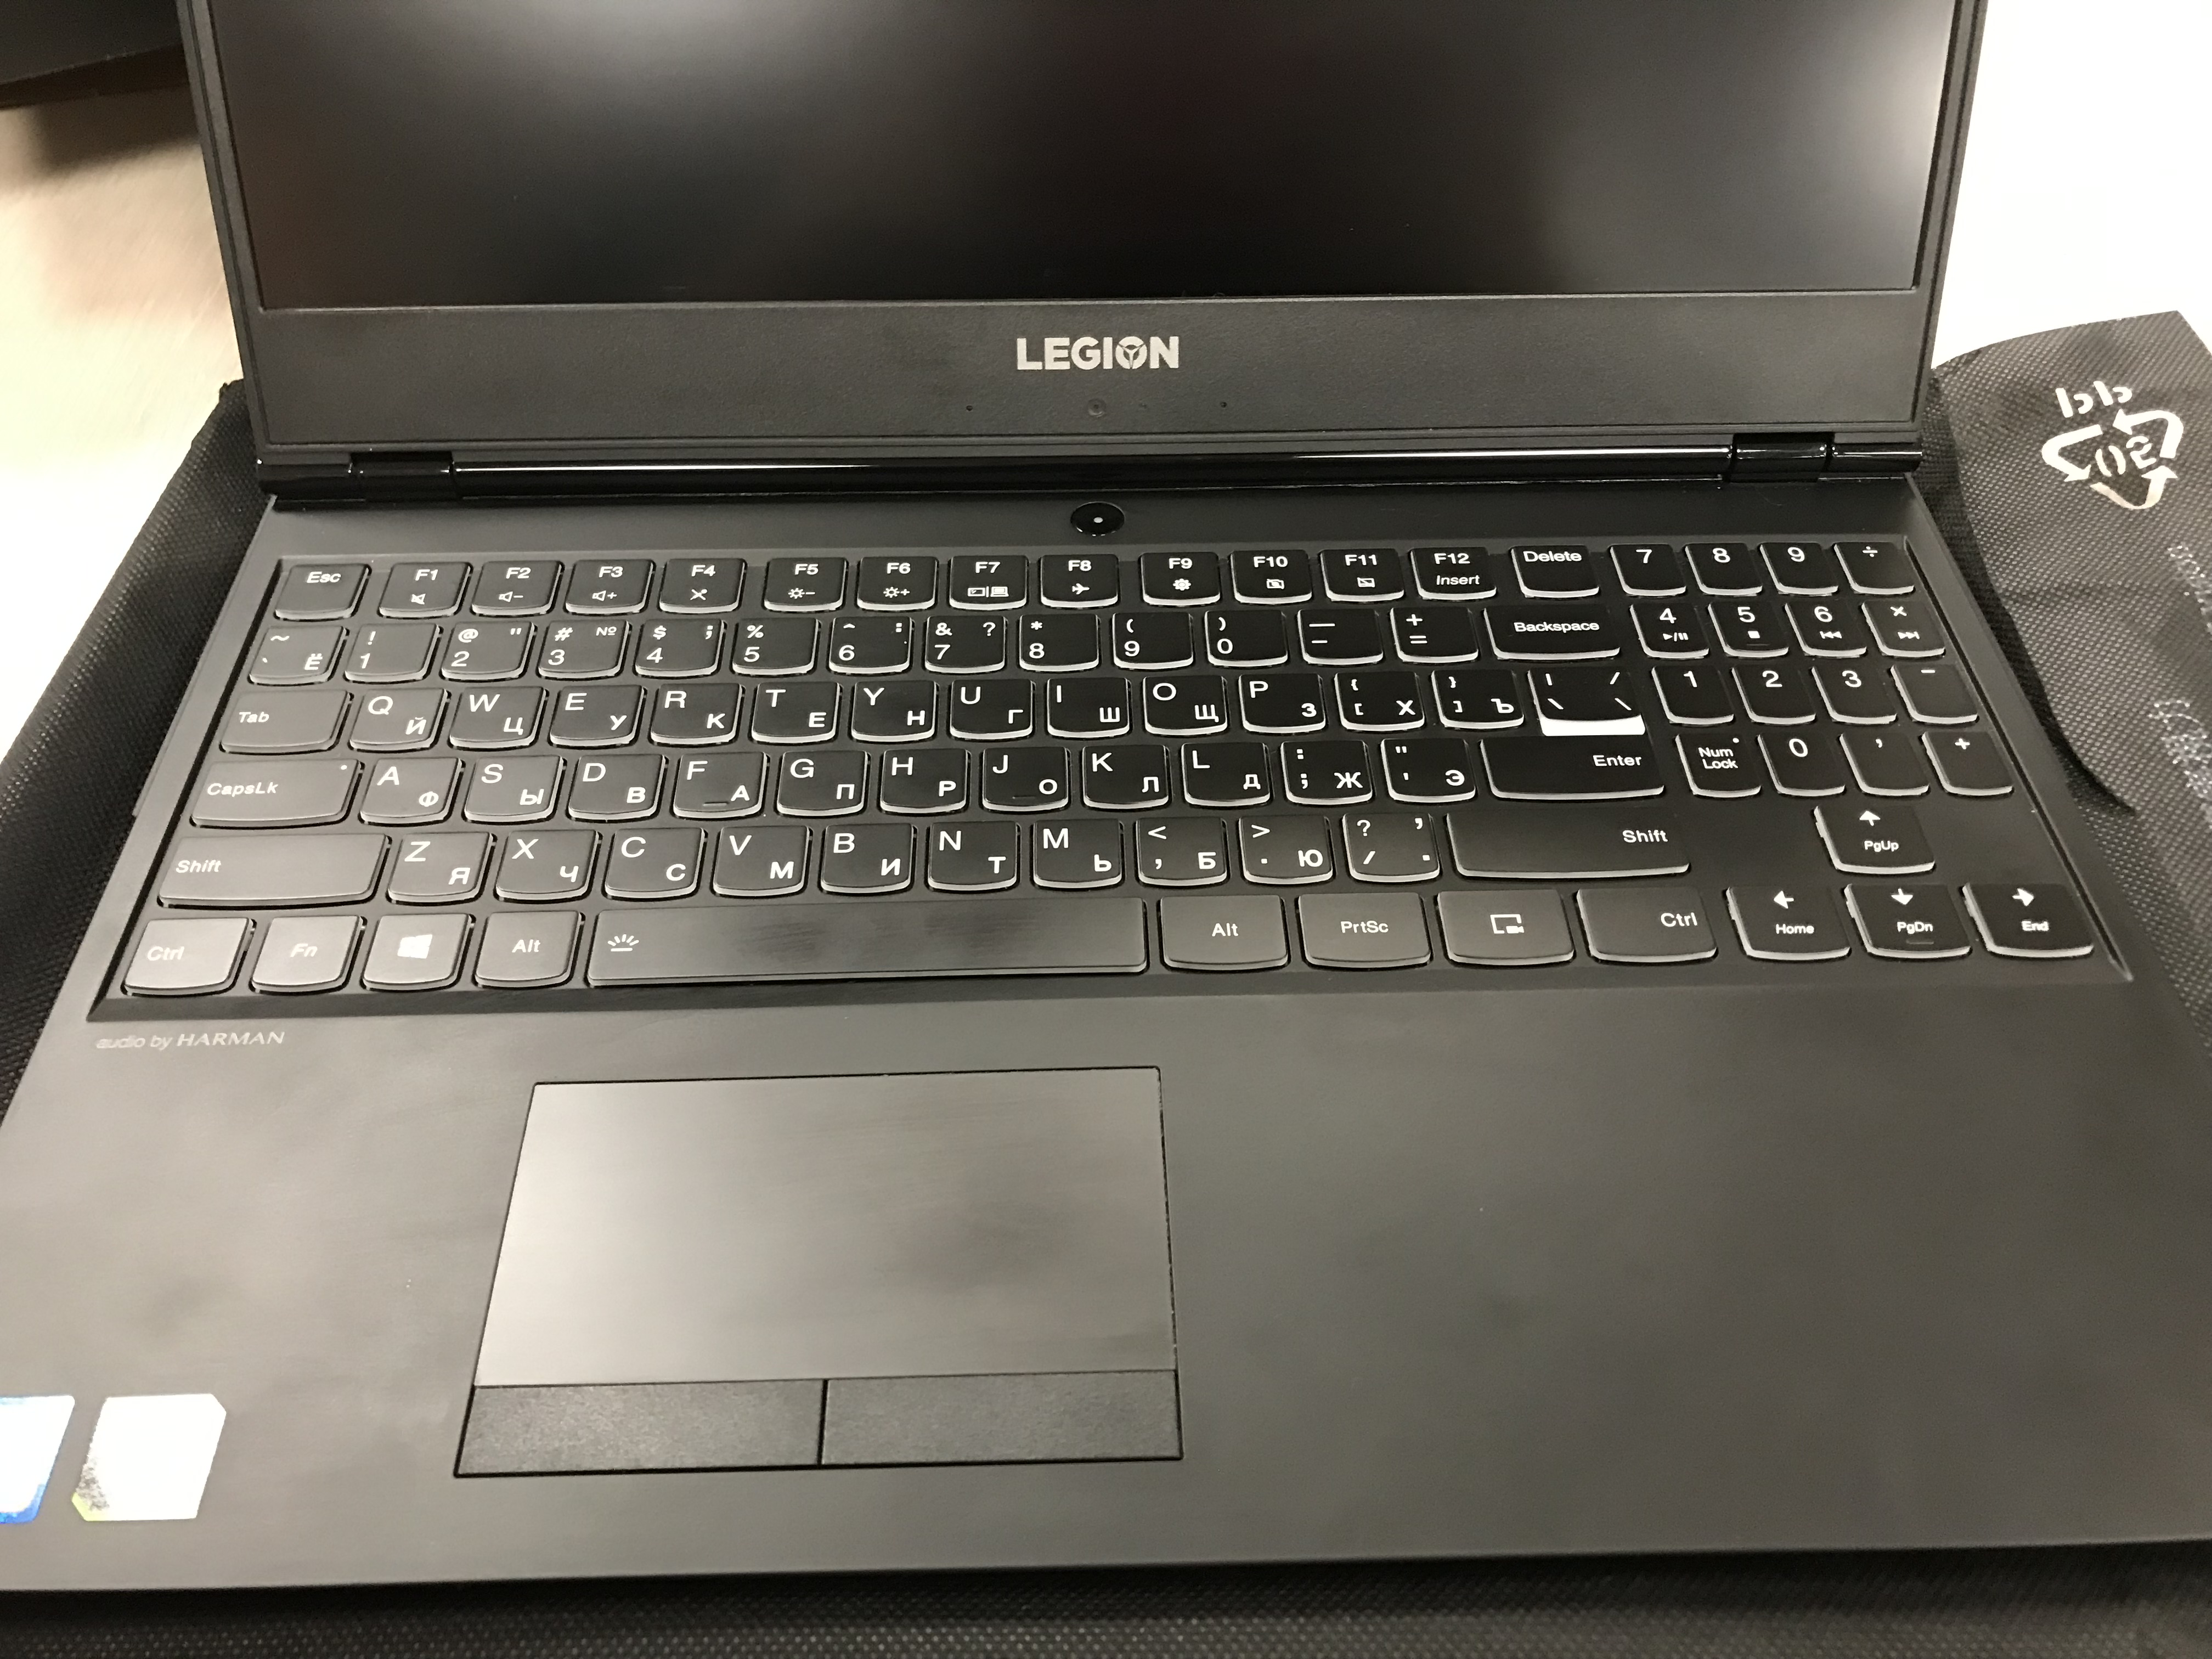 Ноутбук Lenovo Legion Y530 15ich Цена